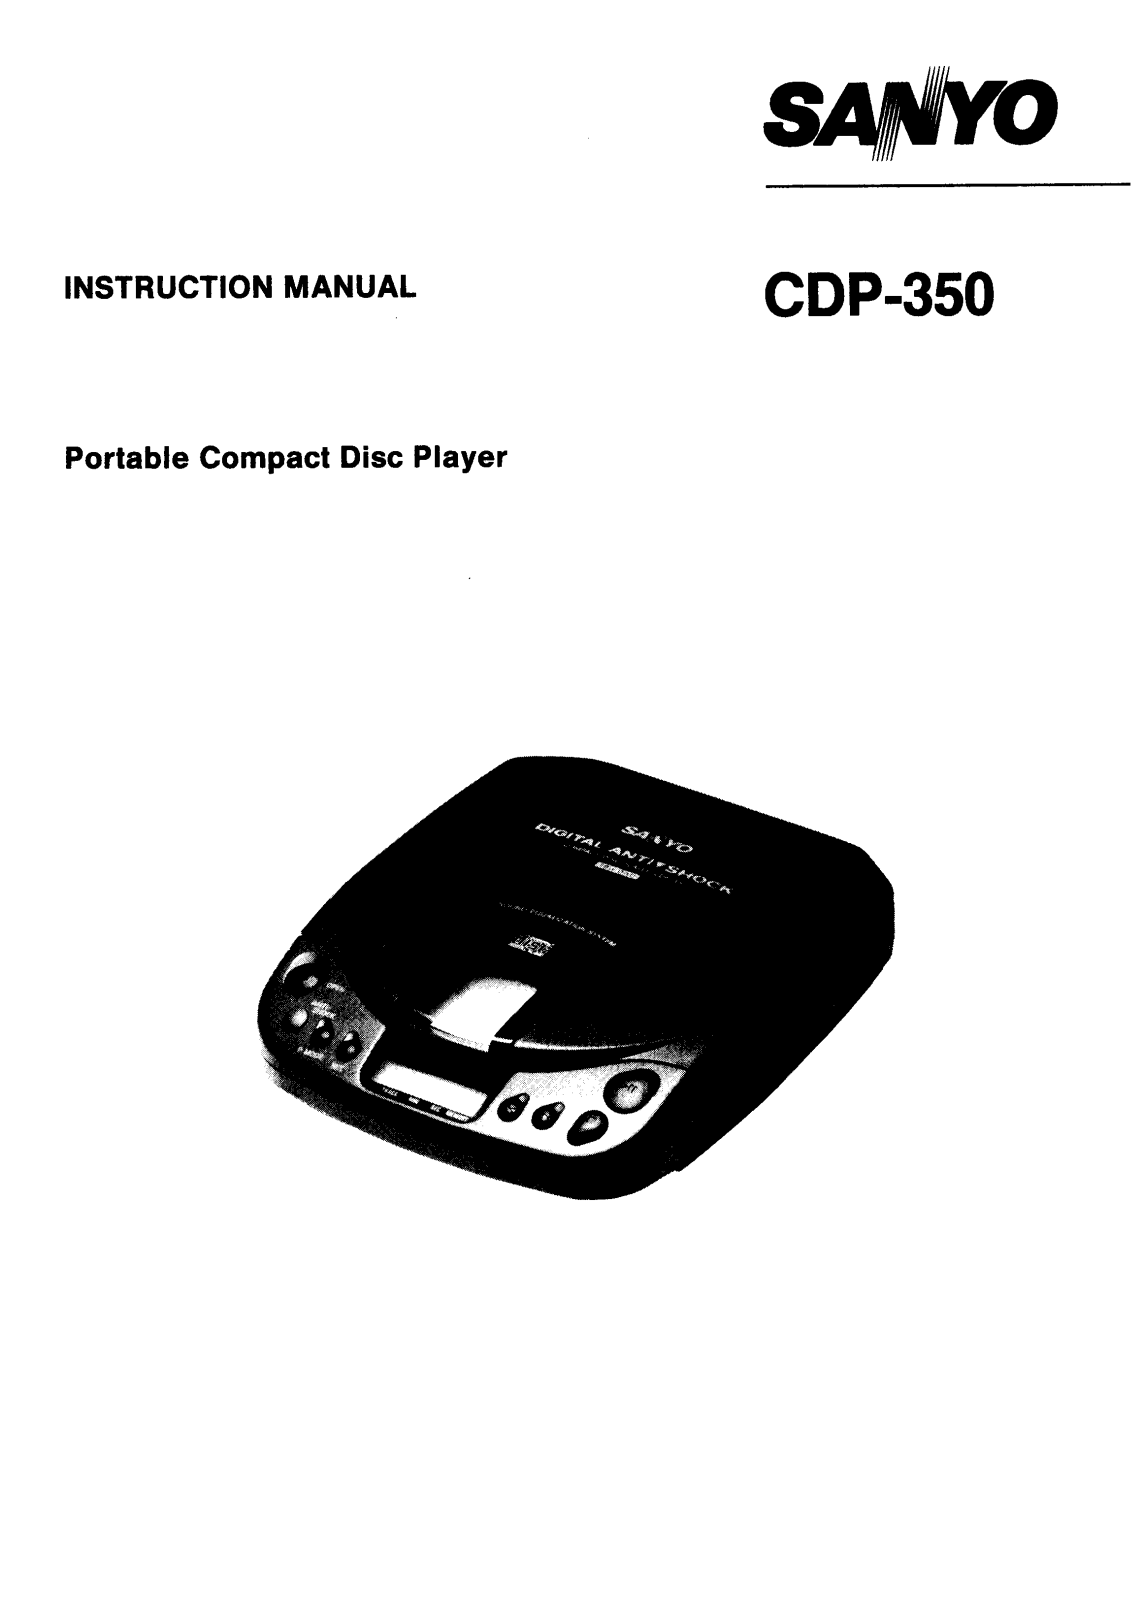 Sanyo CDP-350 Instruction Manual